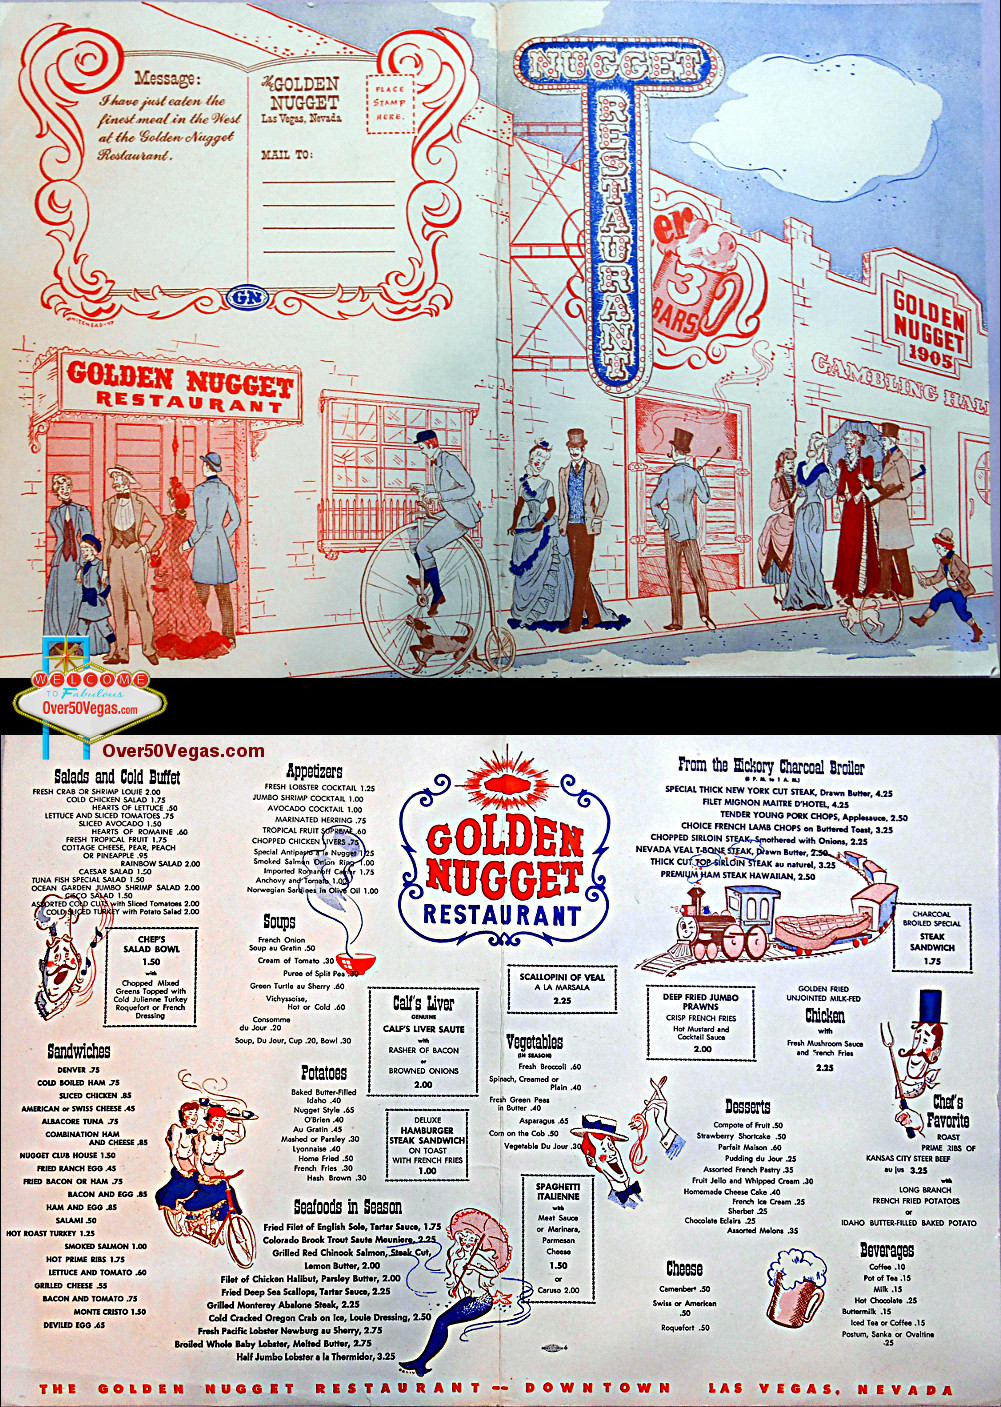 Golden Nugget  Las Vegas  old menu